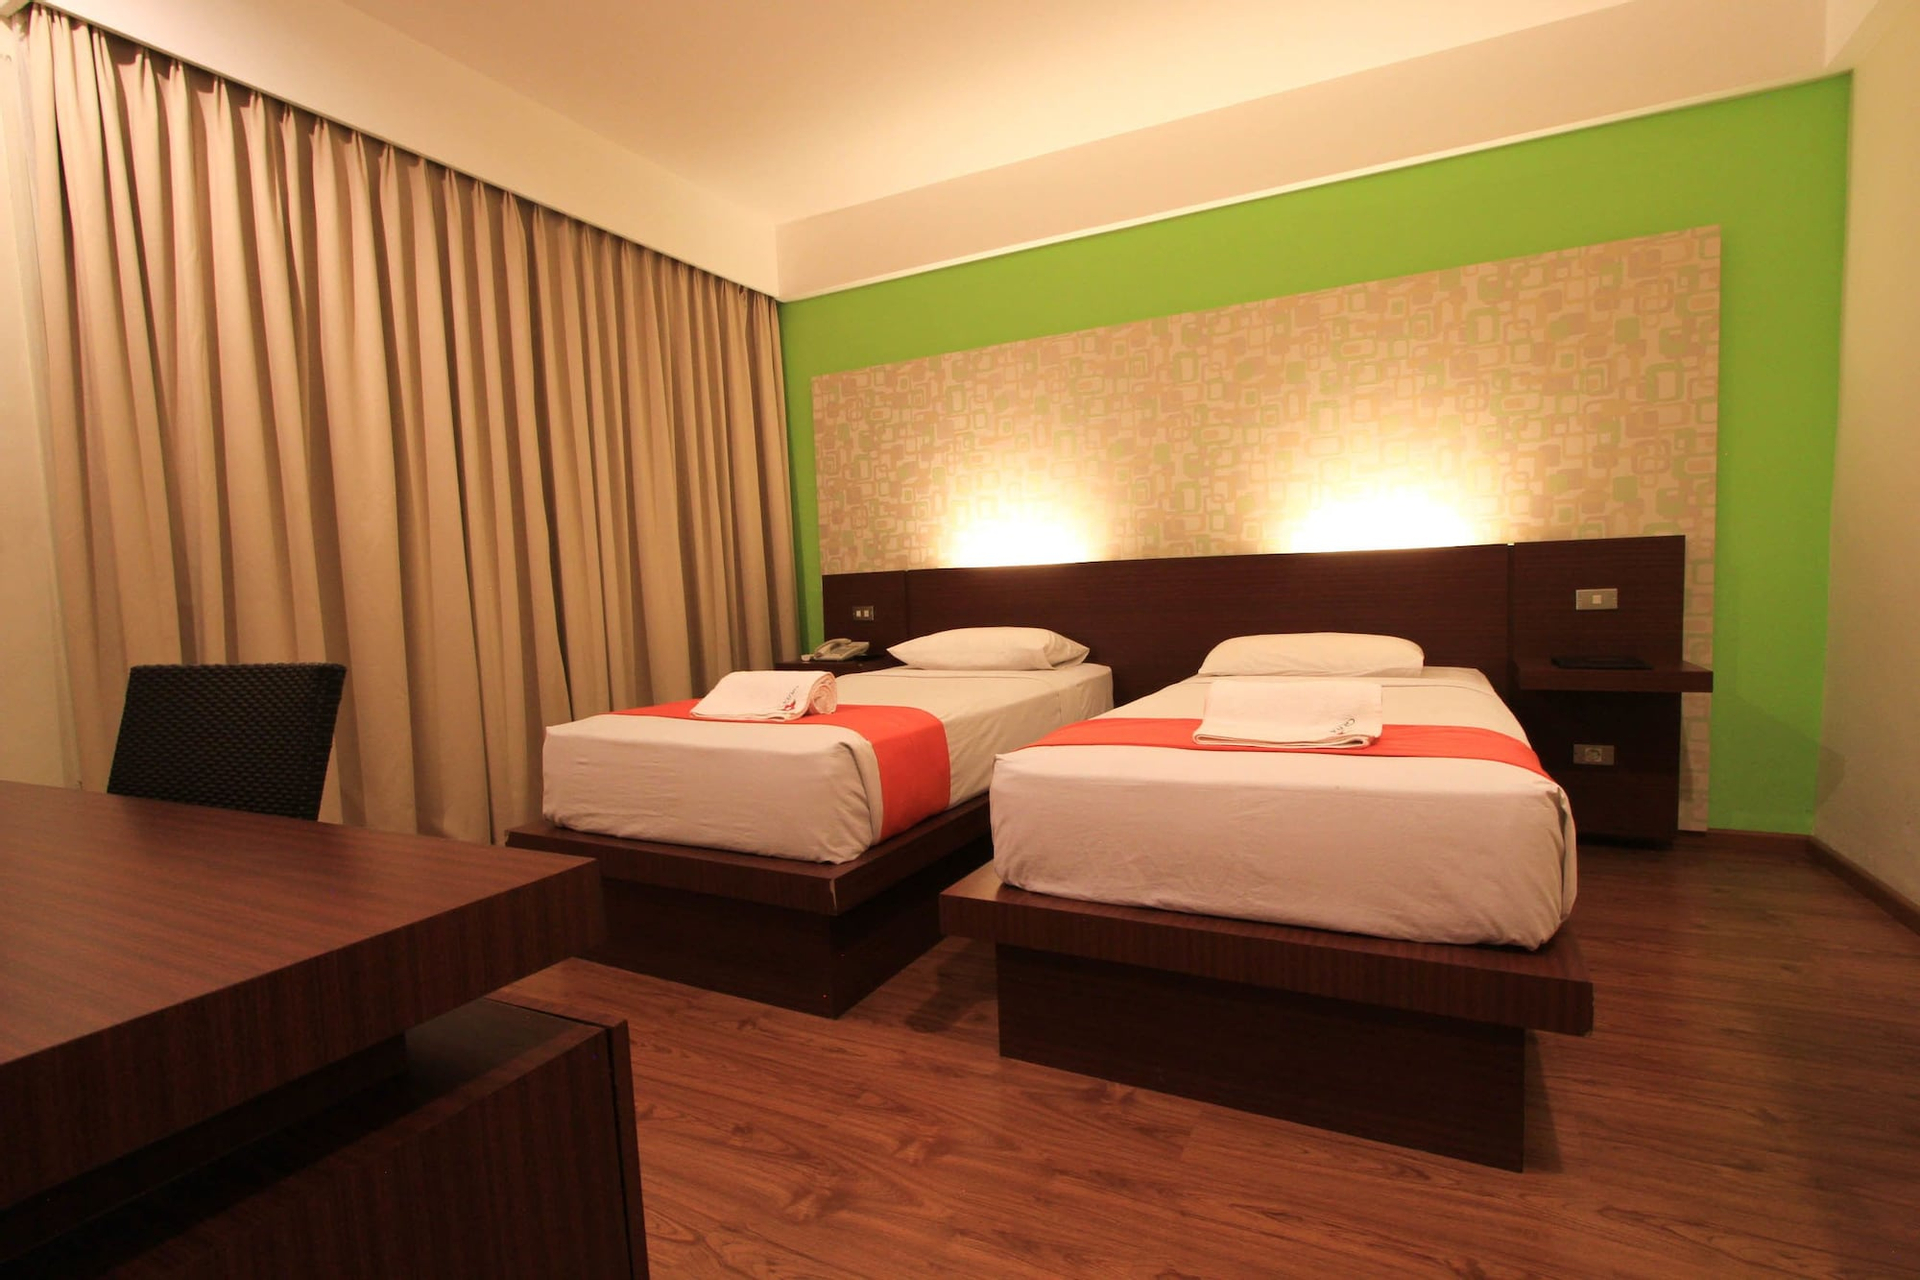 Bedroom 4, Griya Asri Hotel, Lombok